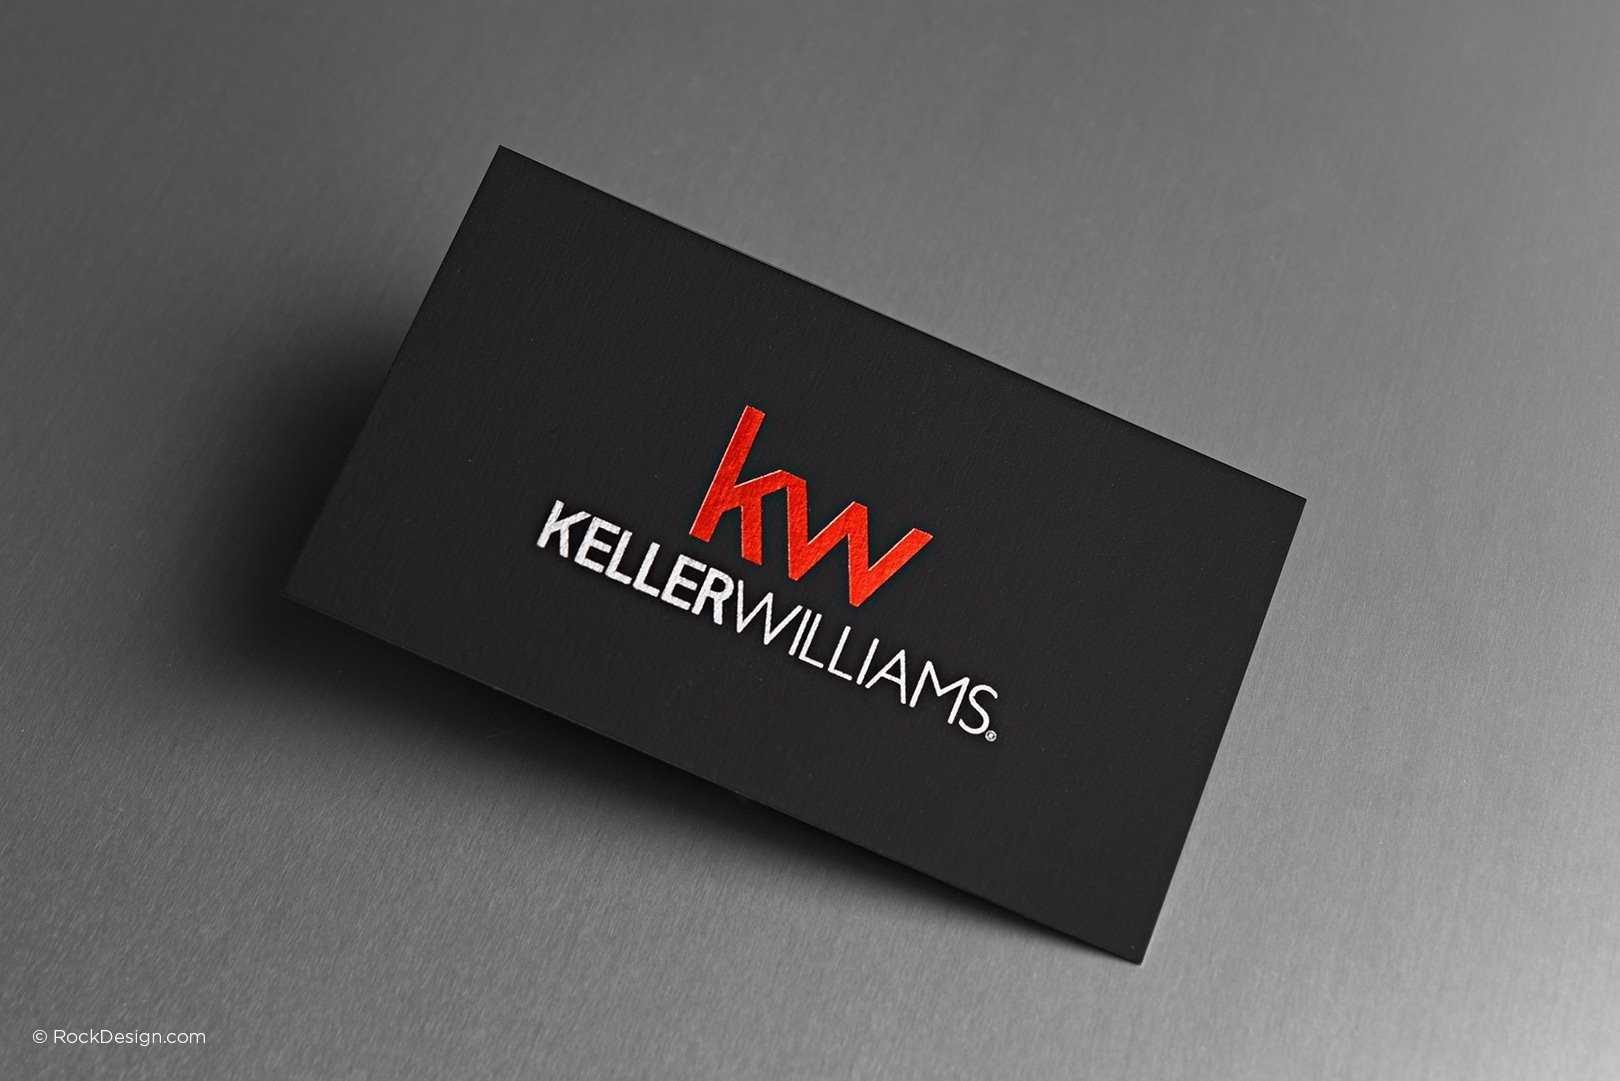 Free Keller Williams Business Card Template With Print Inside Keller Williams Business Card Templates